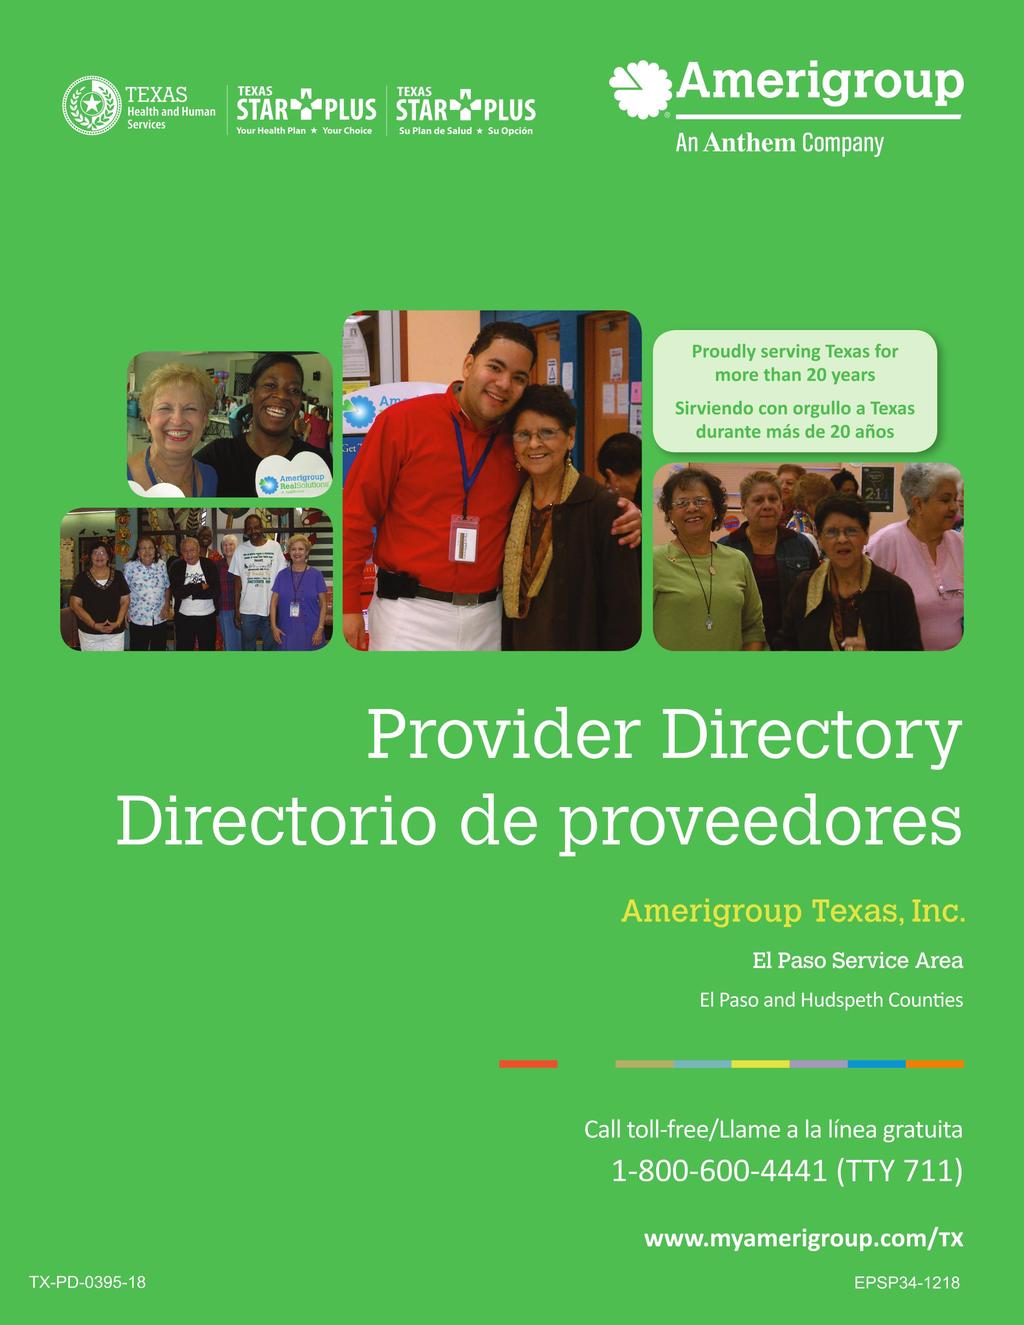 Amerigroup provider directory ny alcon medical education